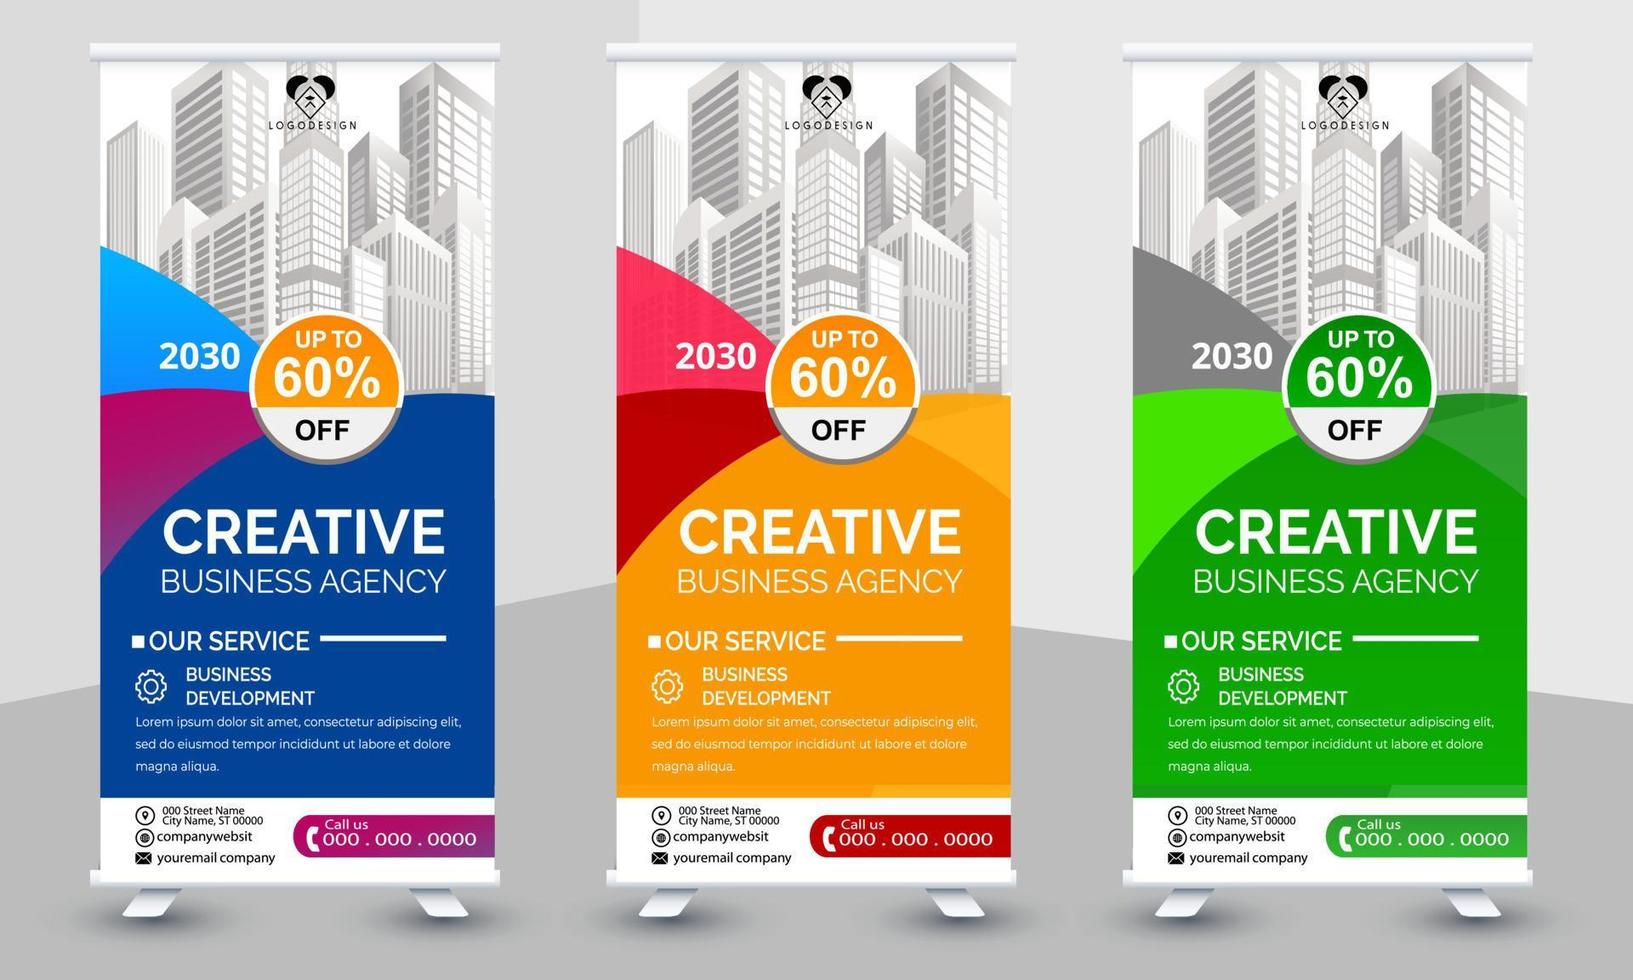 creative business roll up banner design. Standee Design Banner, Corporate digital Roll Up Banner. vector